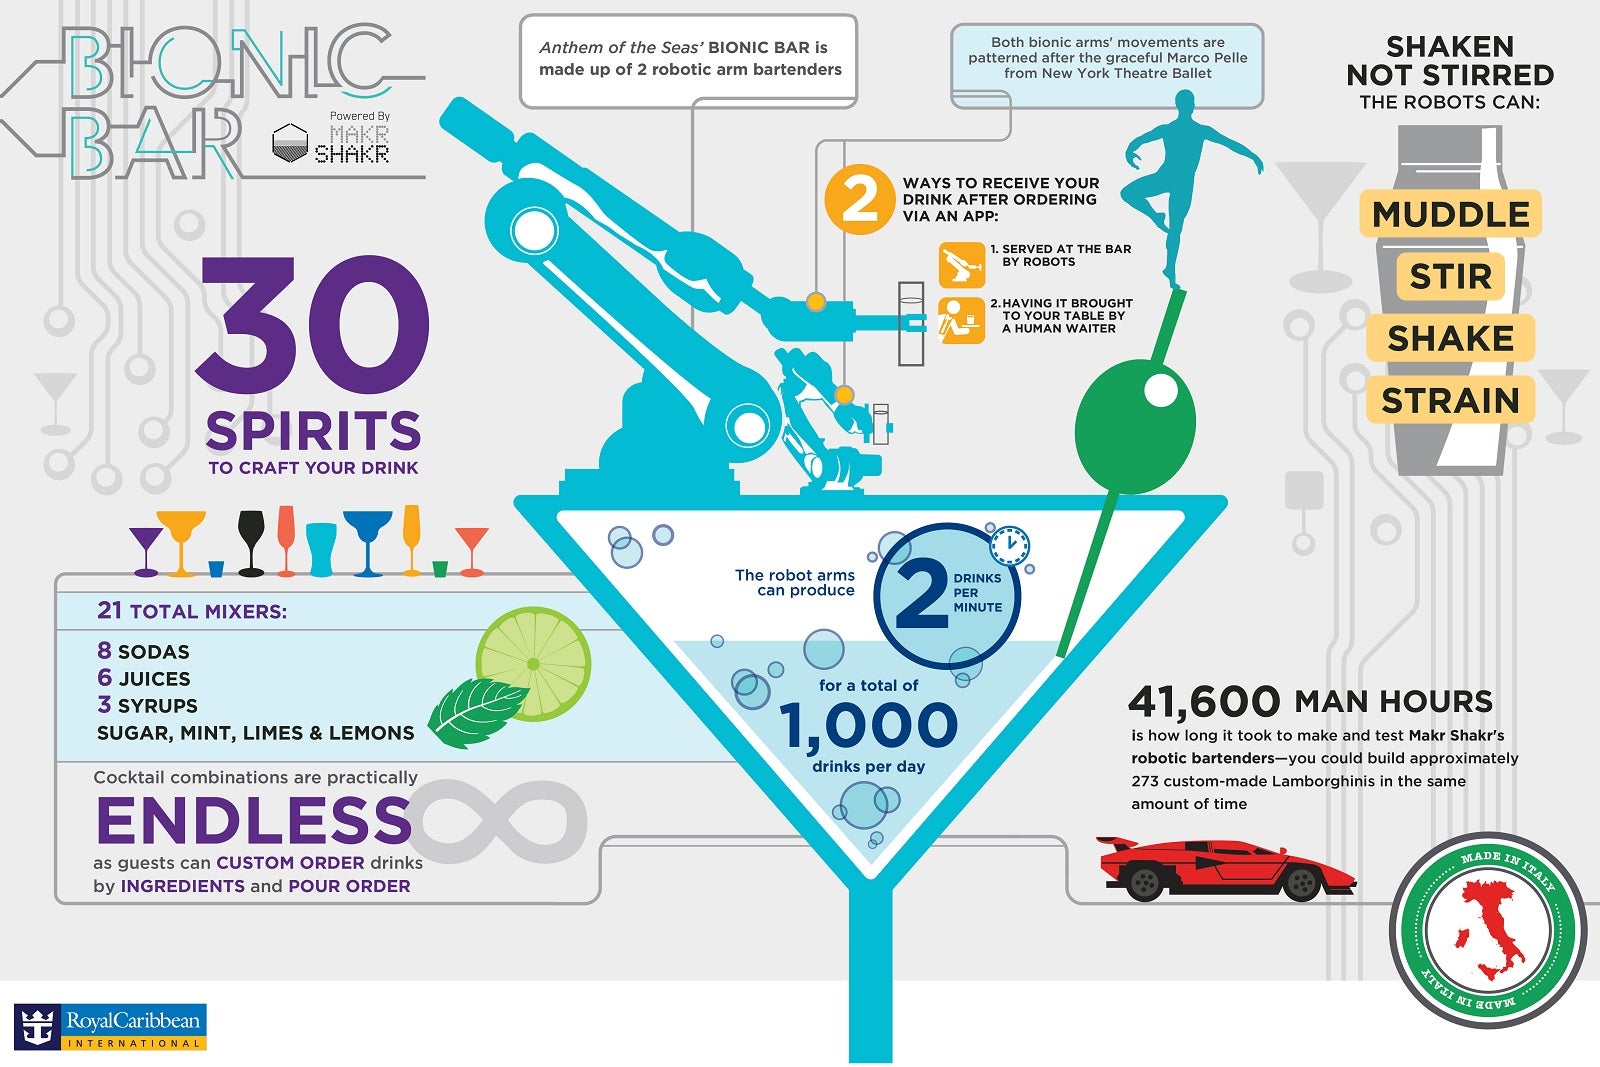 A Bionic Bar infographic